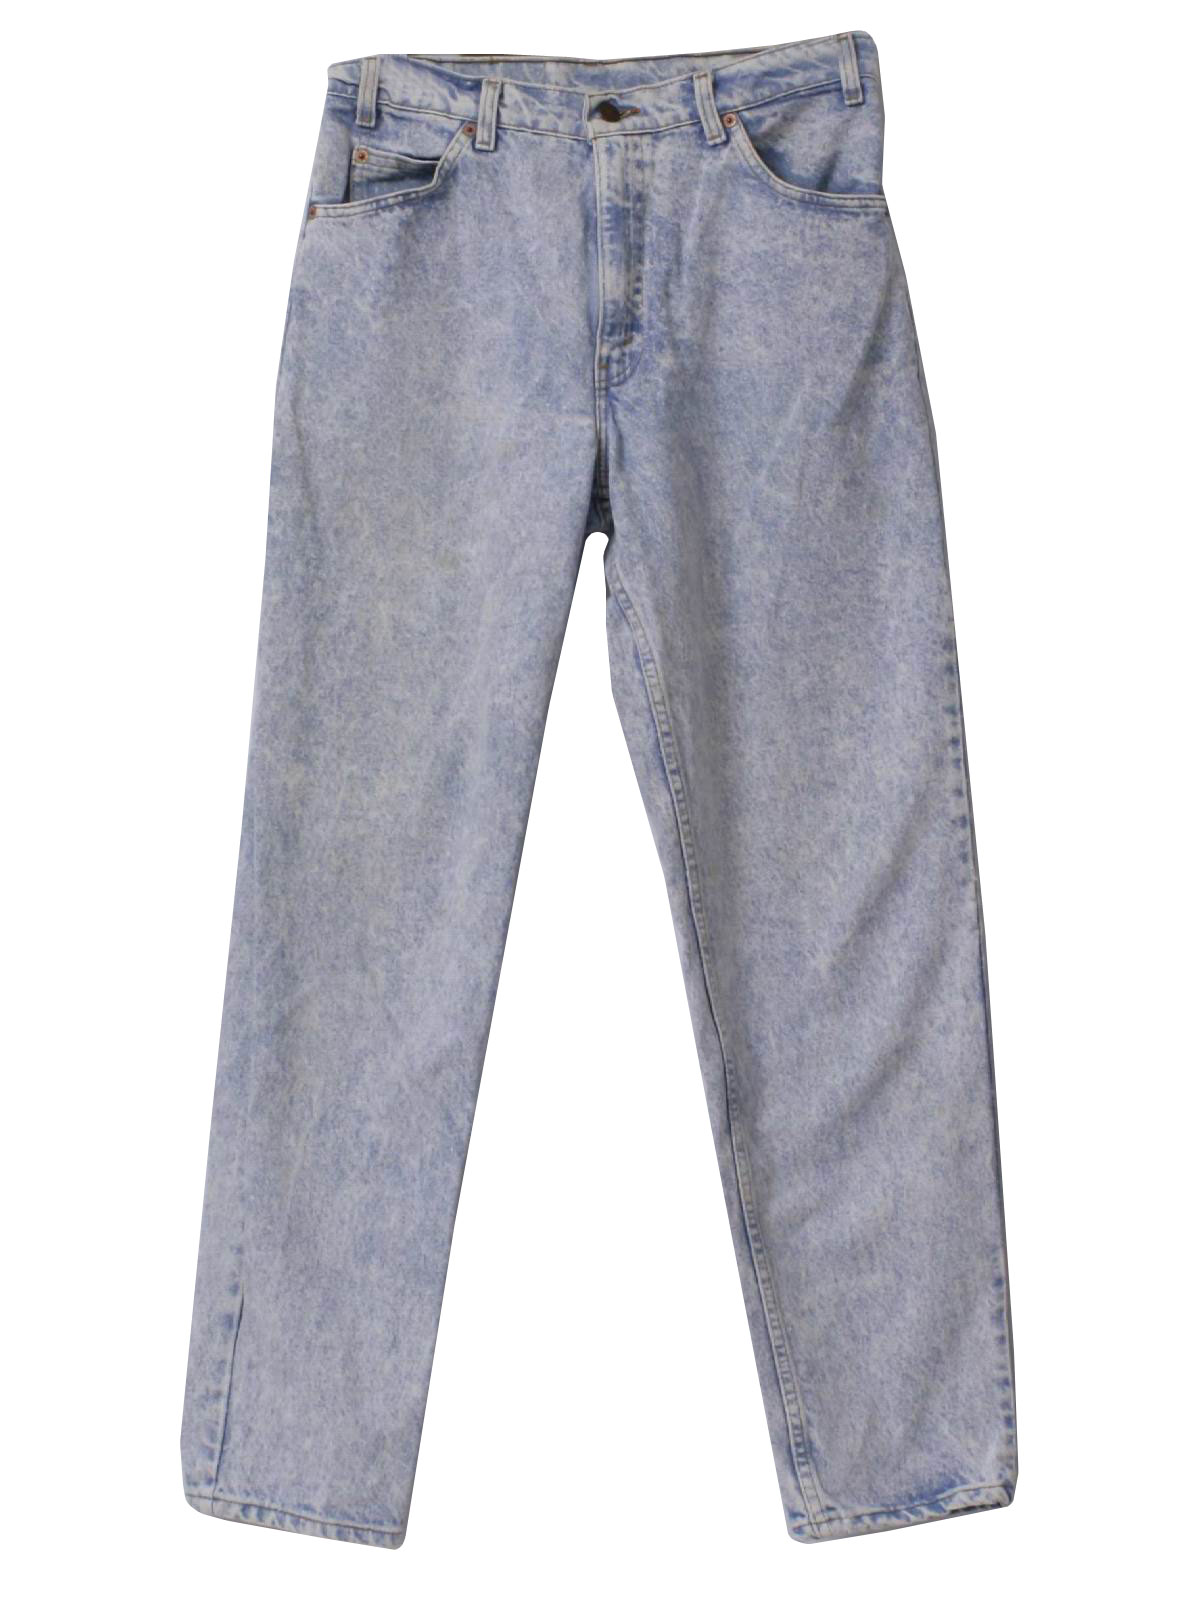 Retro Eighties Pants: 80s -Levis 550- Mens very light blue acid washed ...